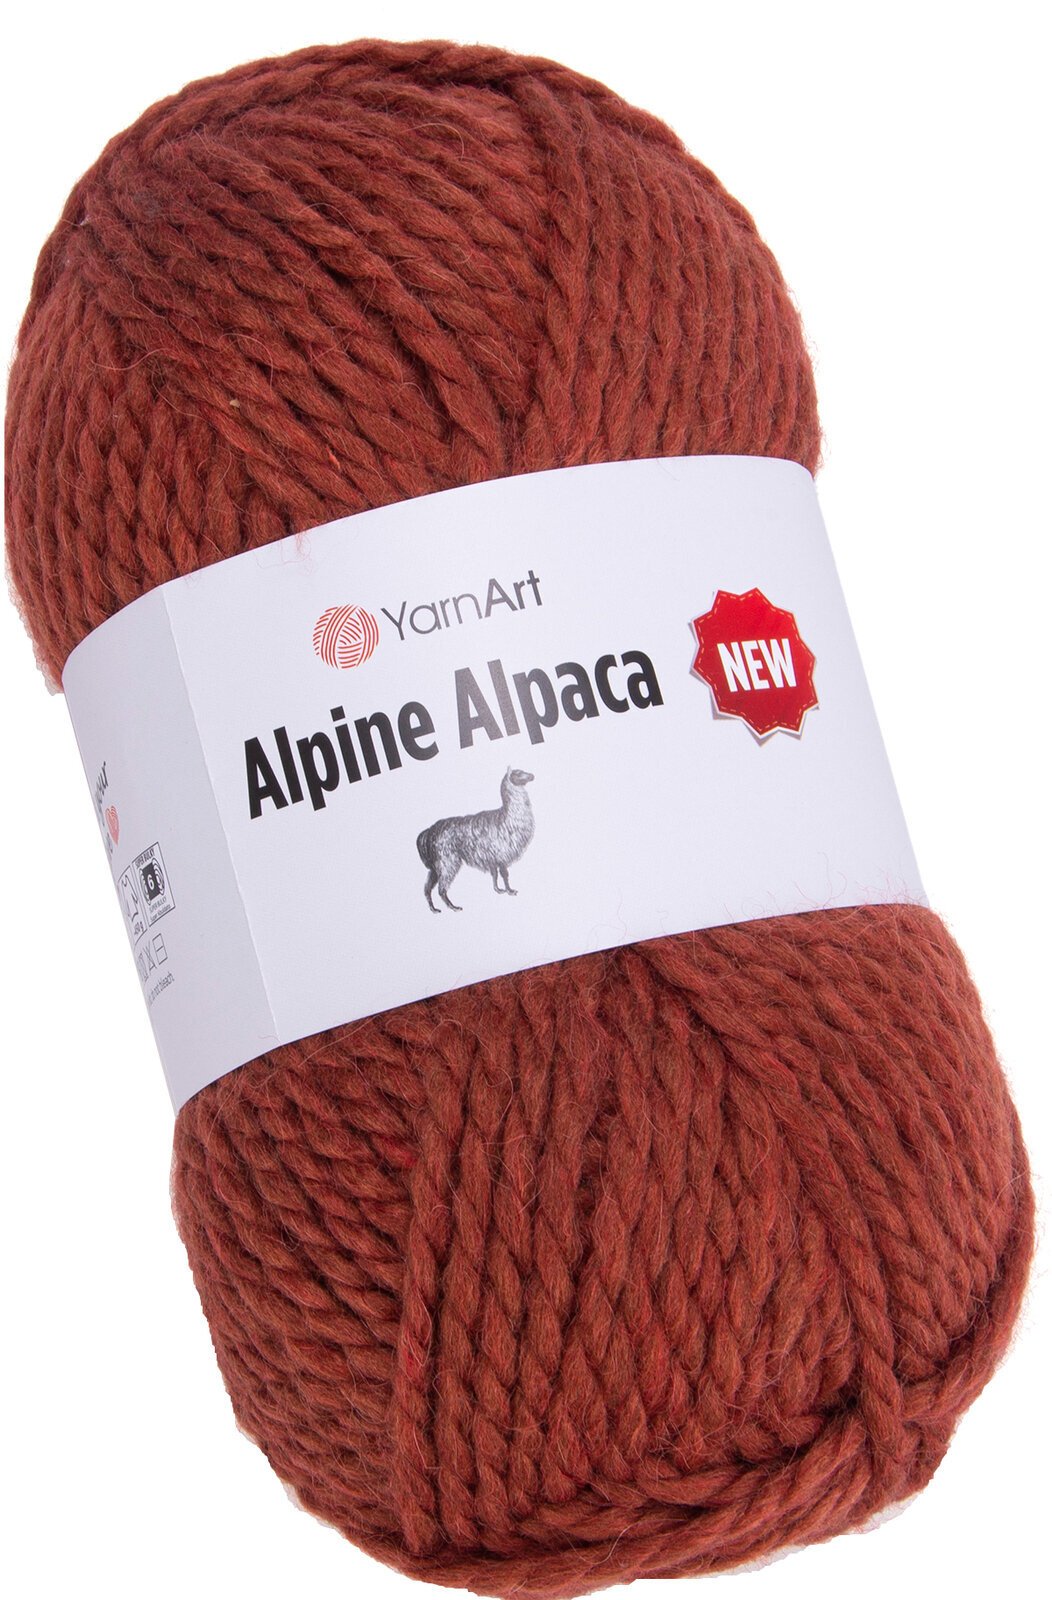 Knitting Yarn Yarn Art Alpine Alpaca New 1452